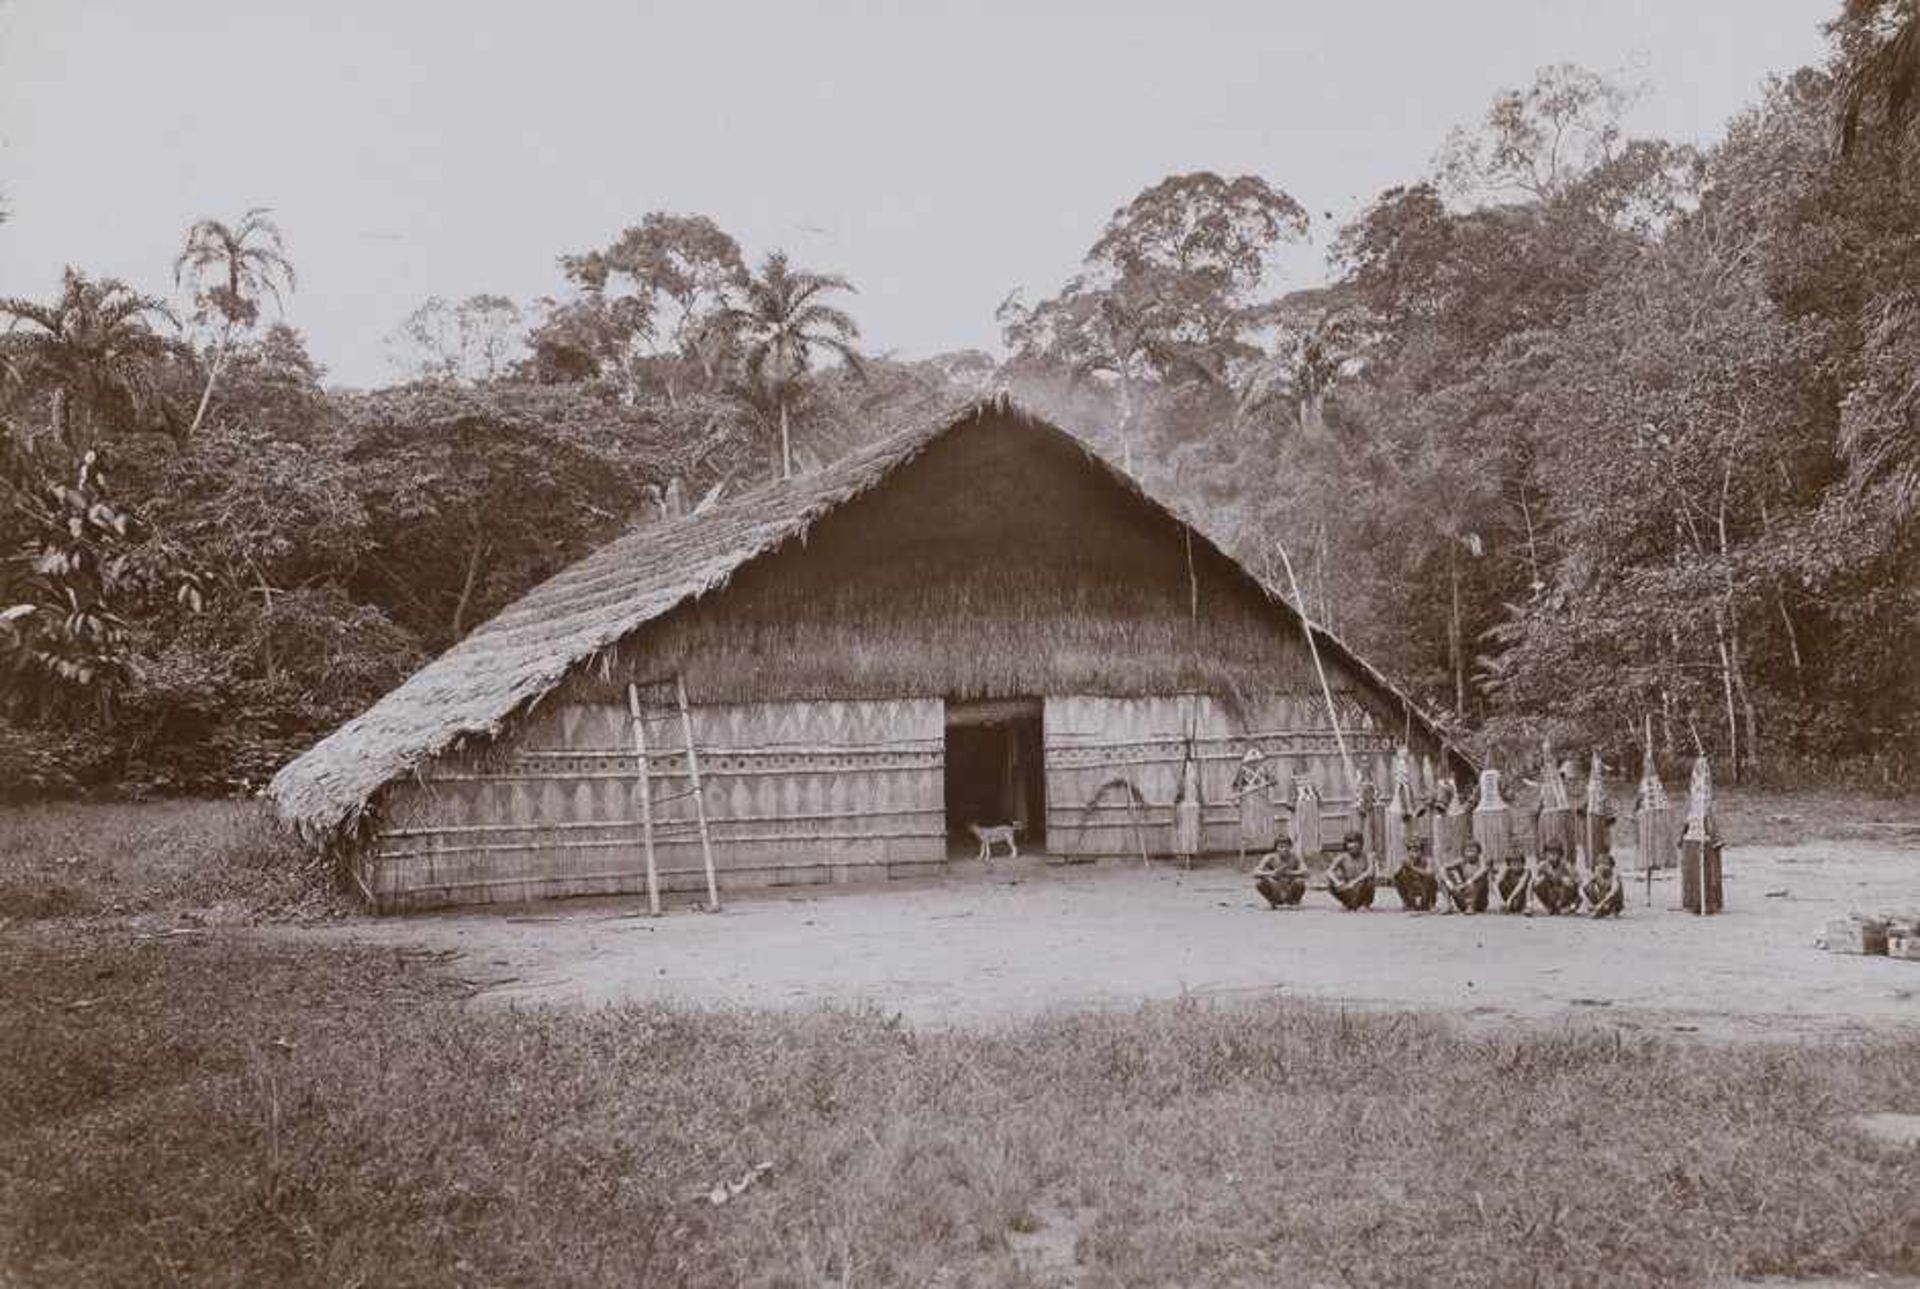 Amazonia / Koch-Grünberg Expedition: Ceremonial images of the Amazon region Photographer: George